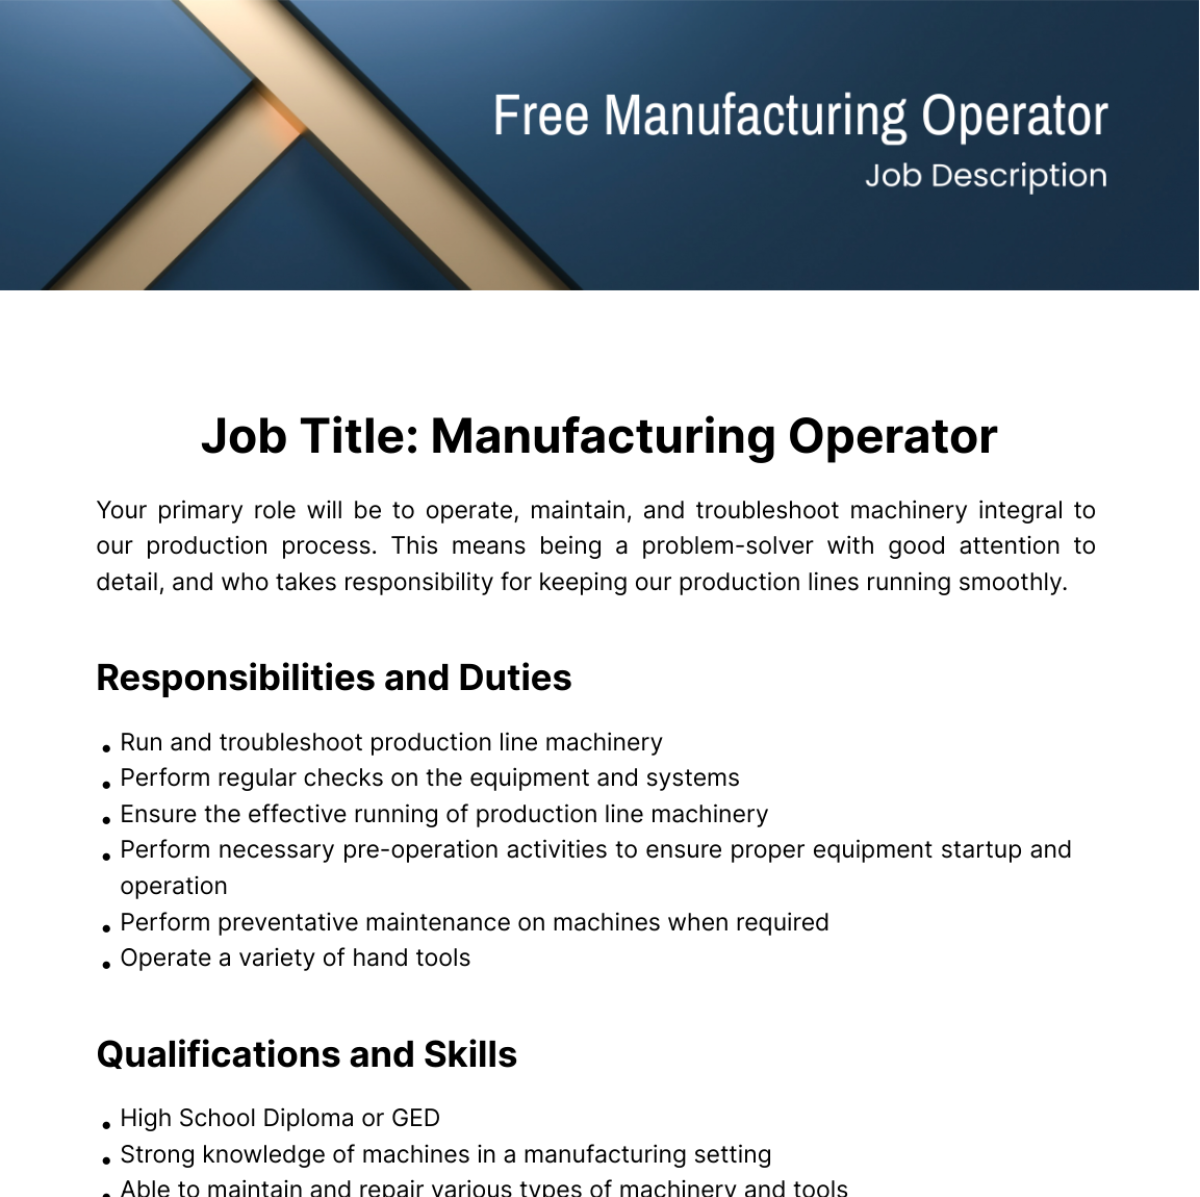 Free Manufacturing Operator Job Description Template